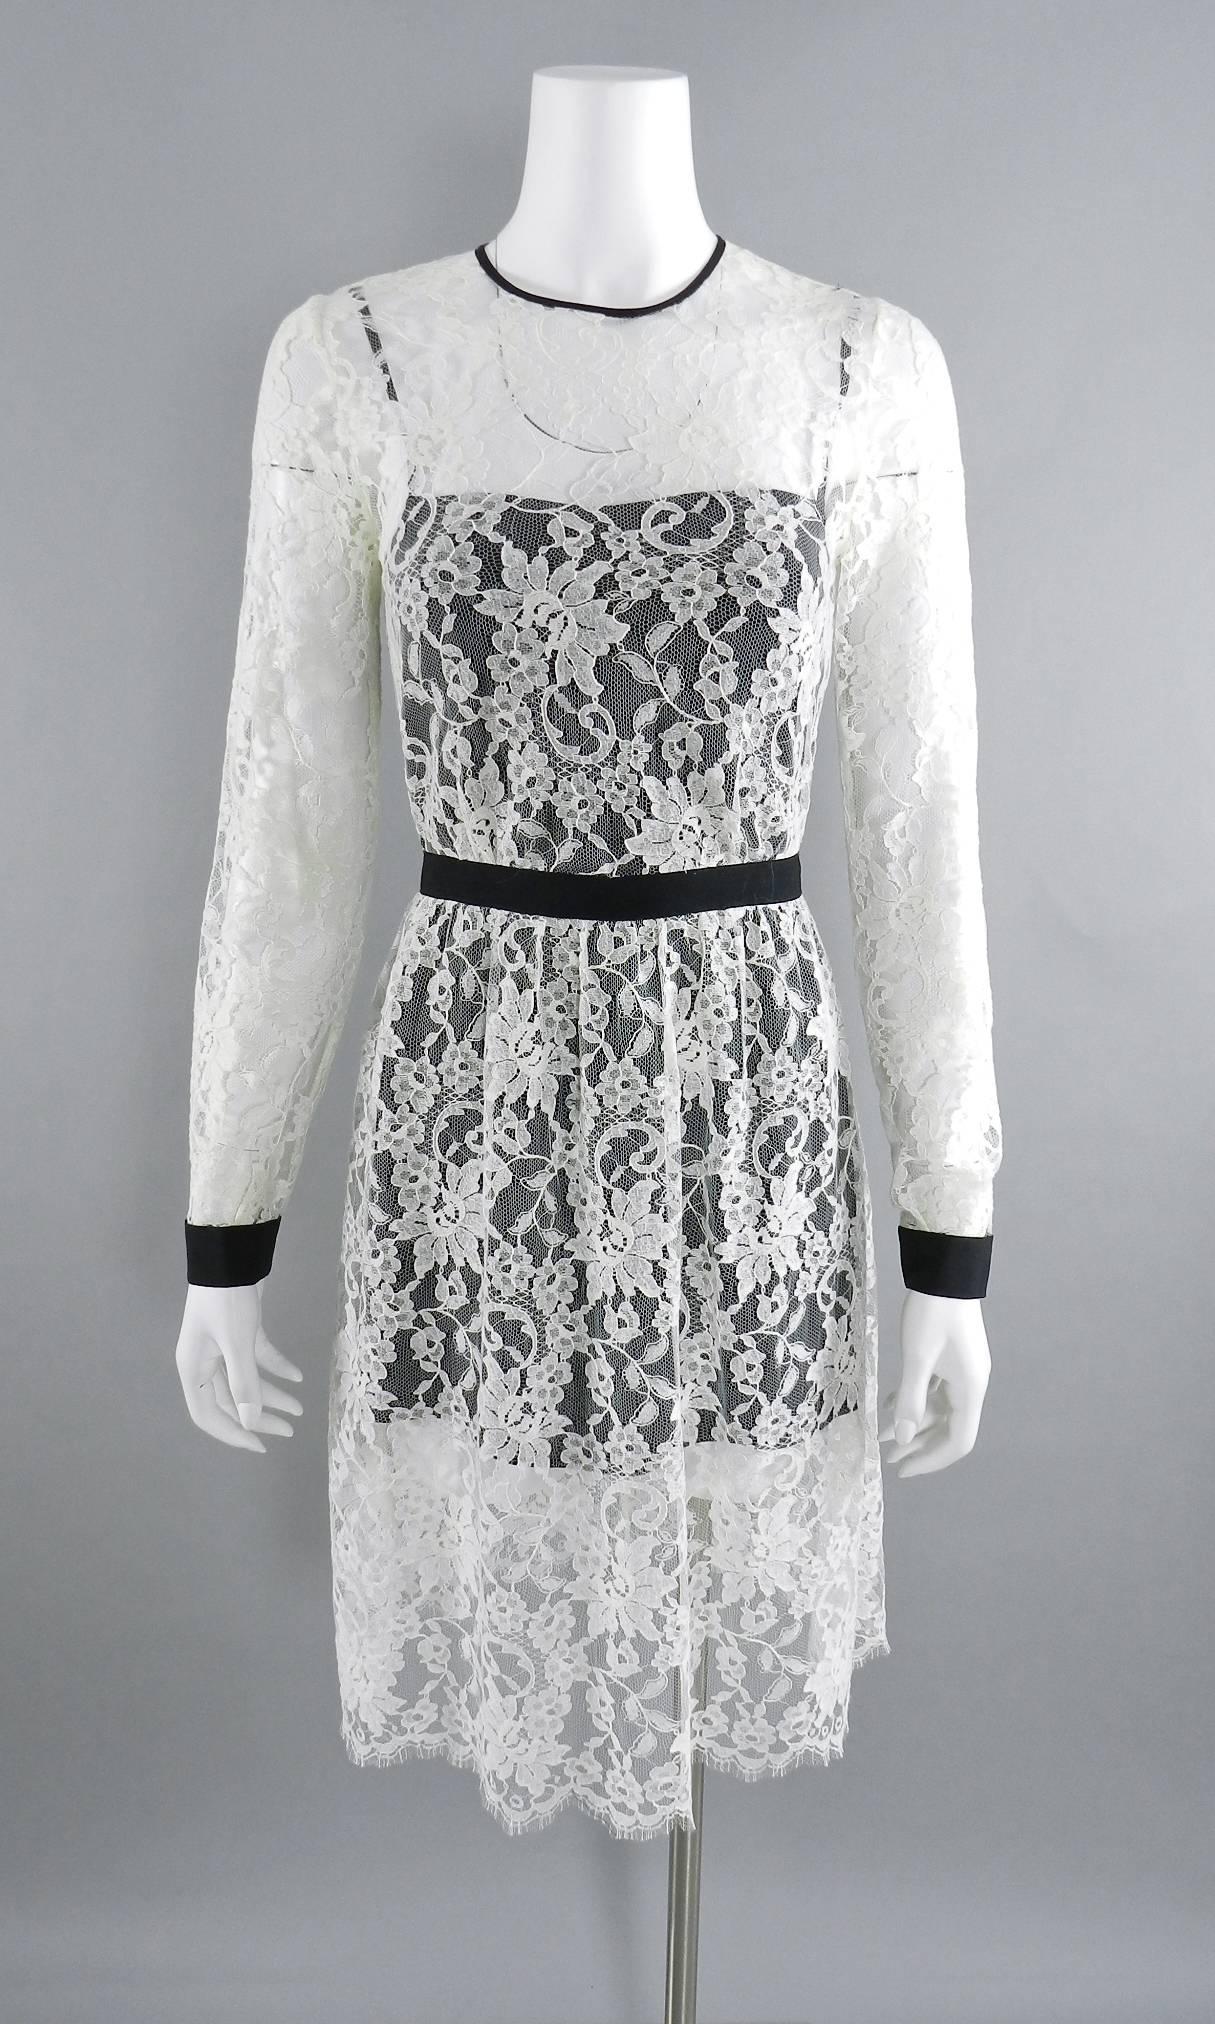 Erdem resort 2014 White Lace 1950s style Dress 2